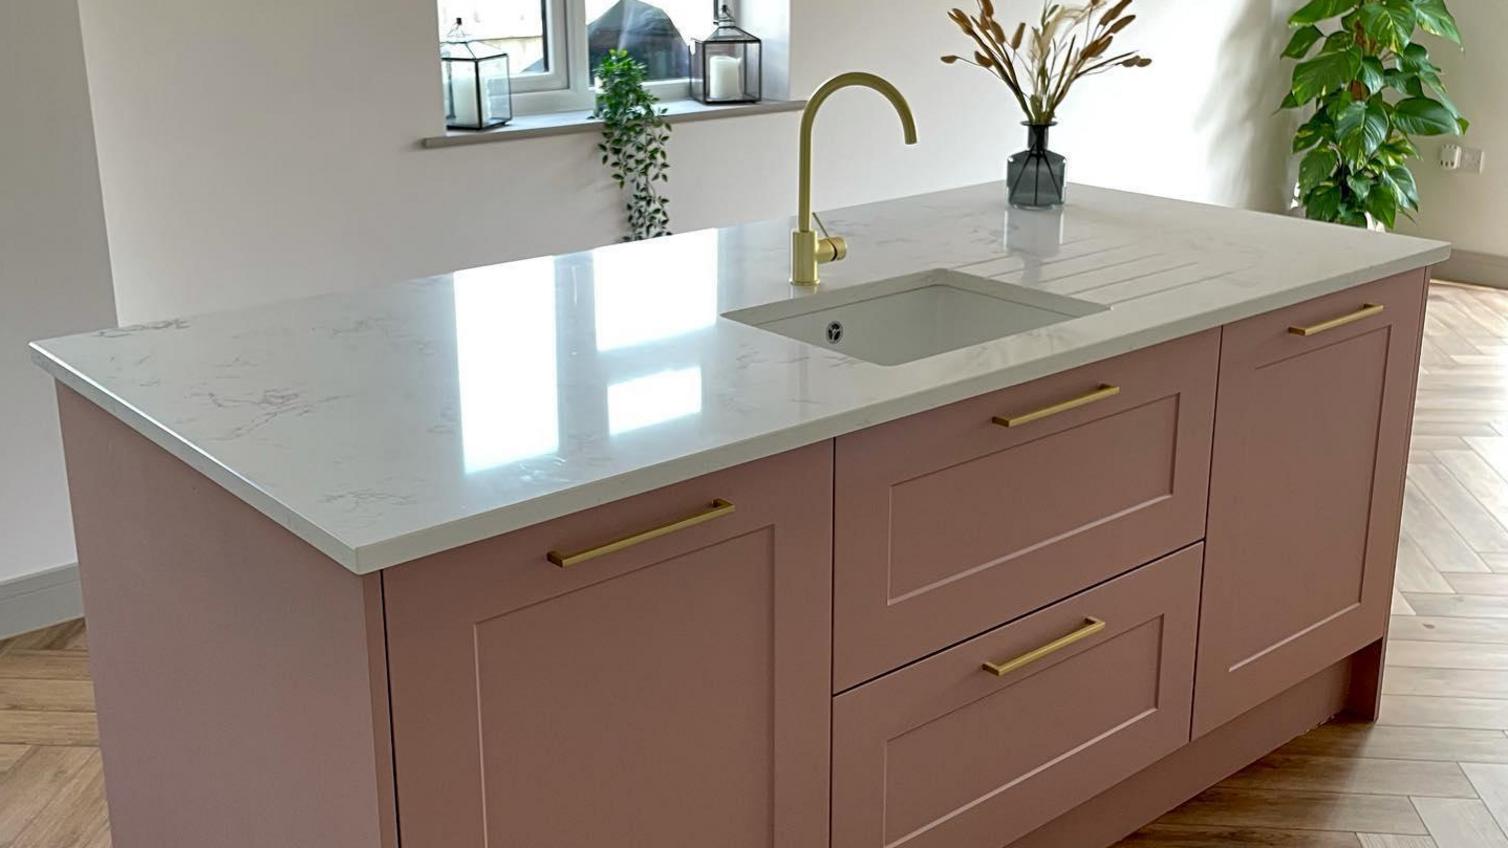 Pink kitchen island with a white quartz worktop, chevron oak flooring, gold bar handles and a gold tap.